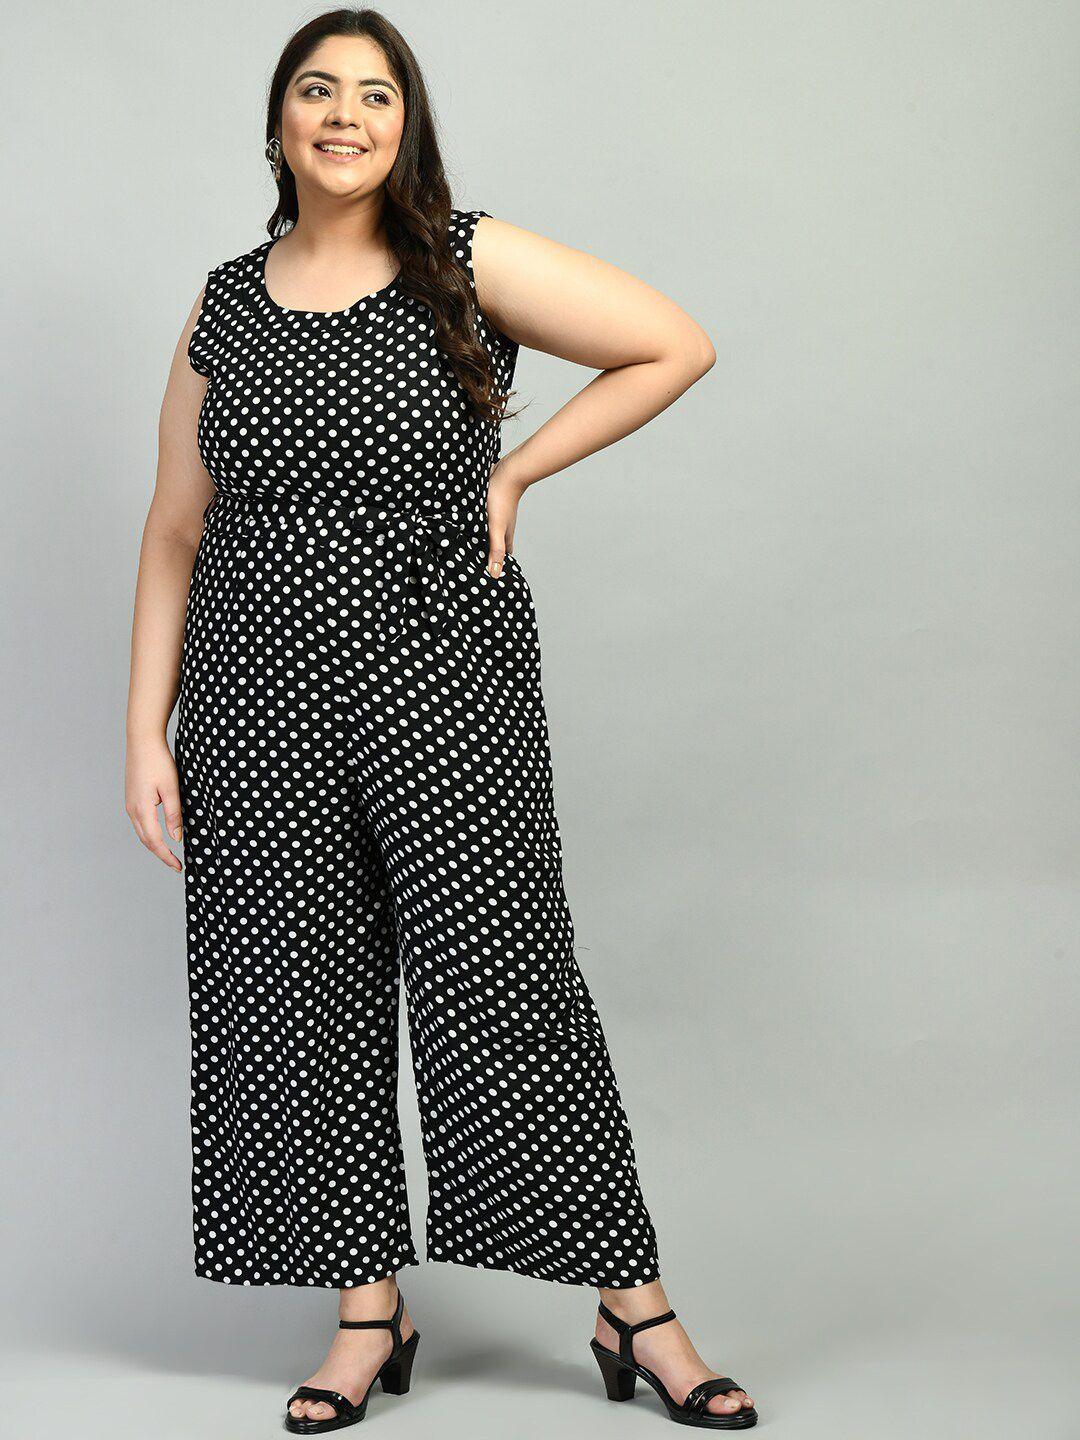 prettyplus by desinoor.com women plus size black & white polka dots basic cotton jumpsuit